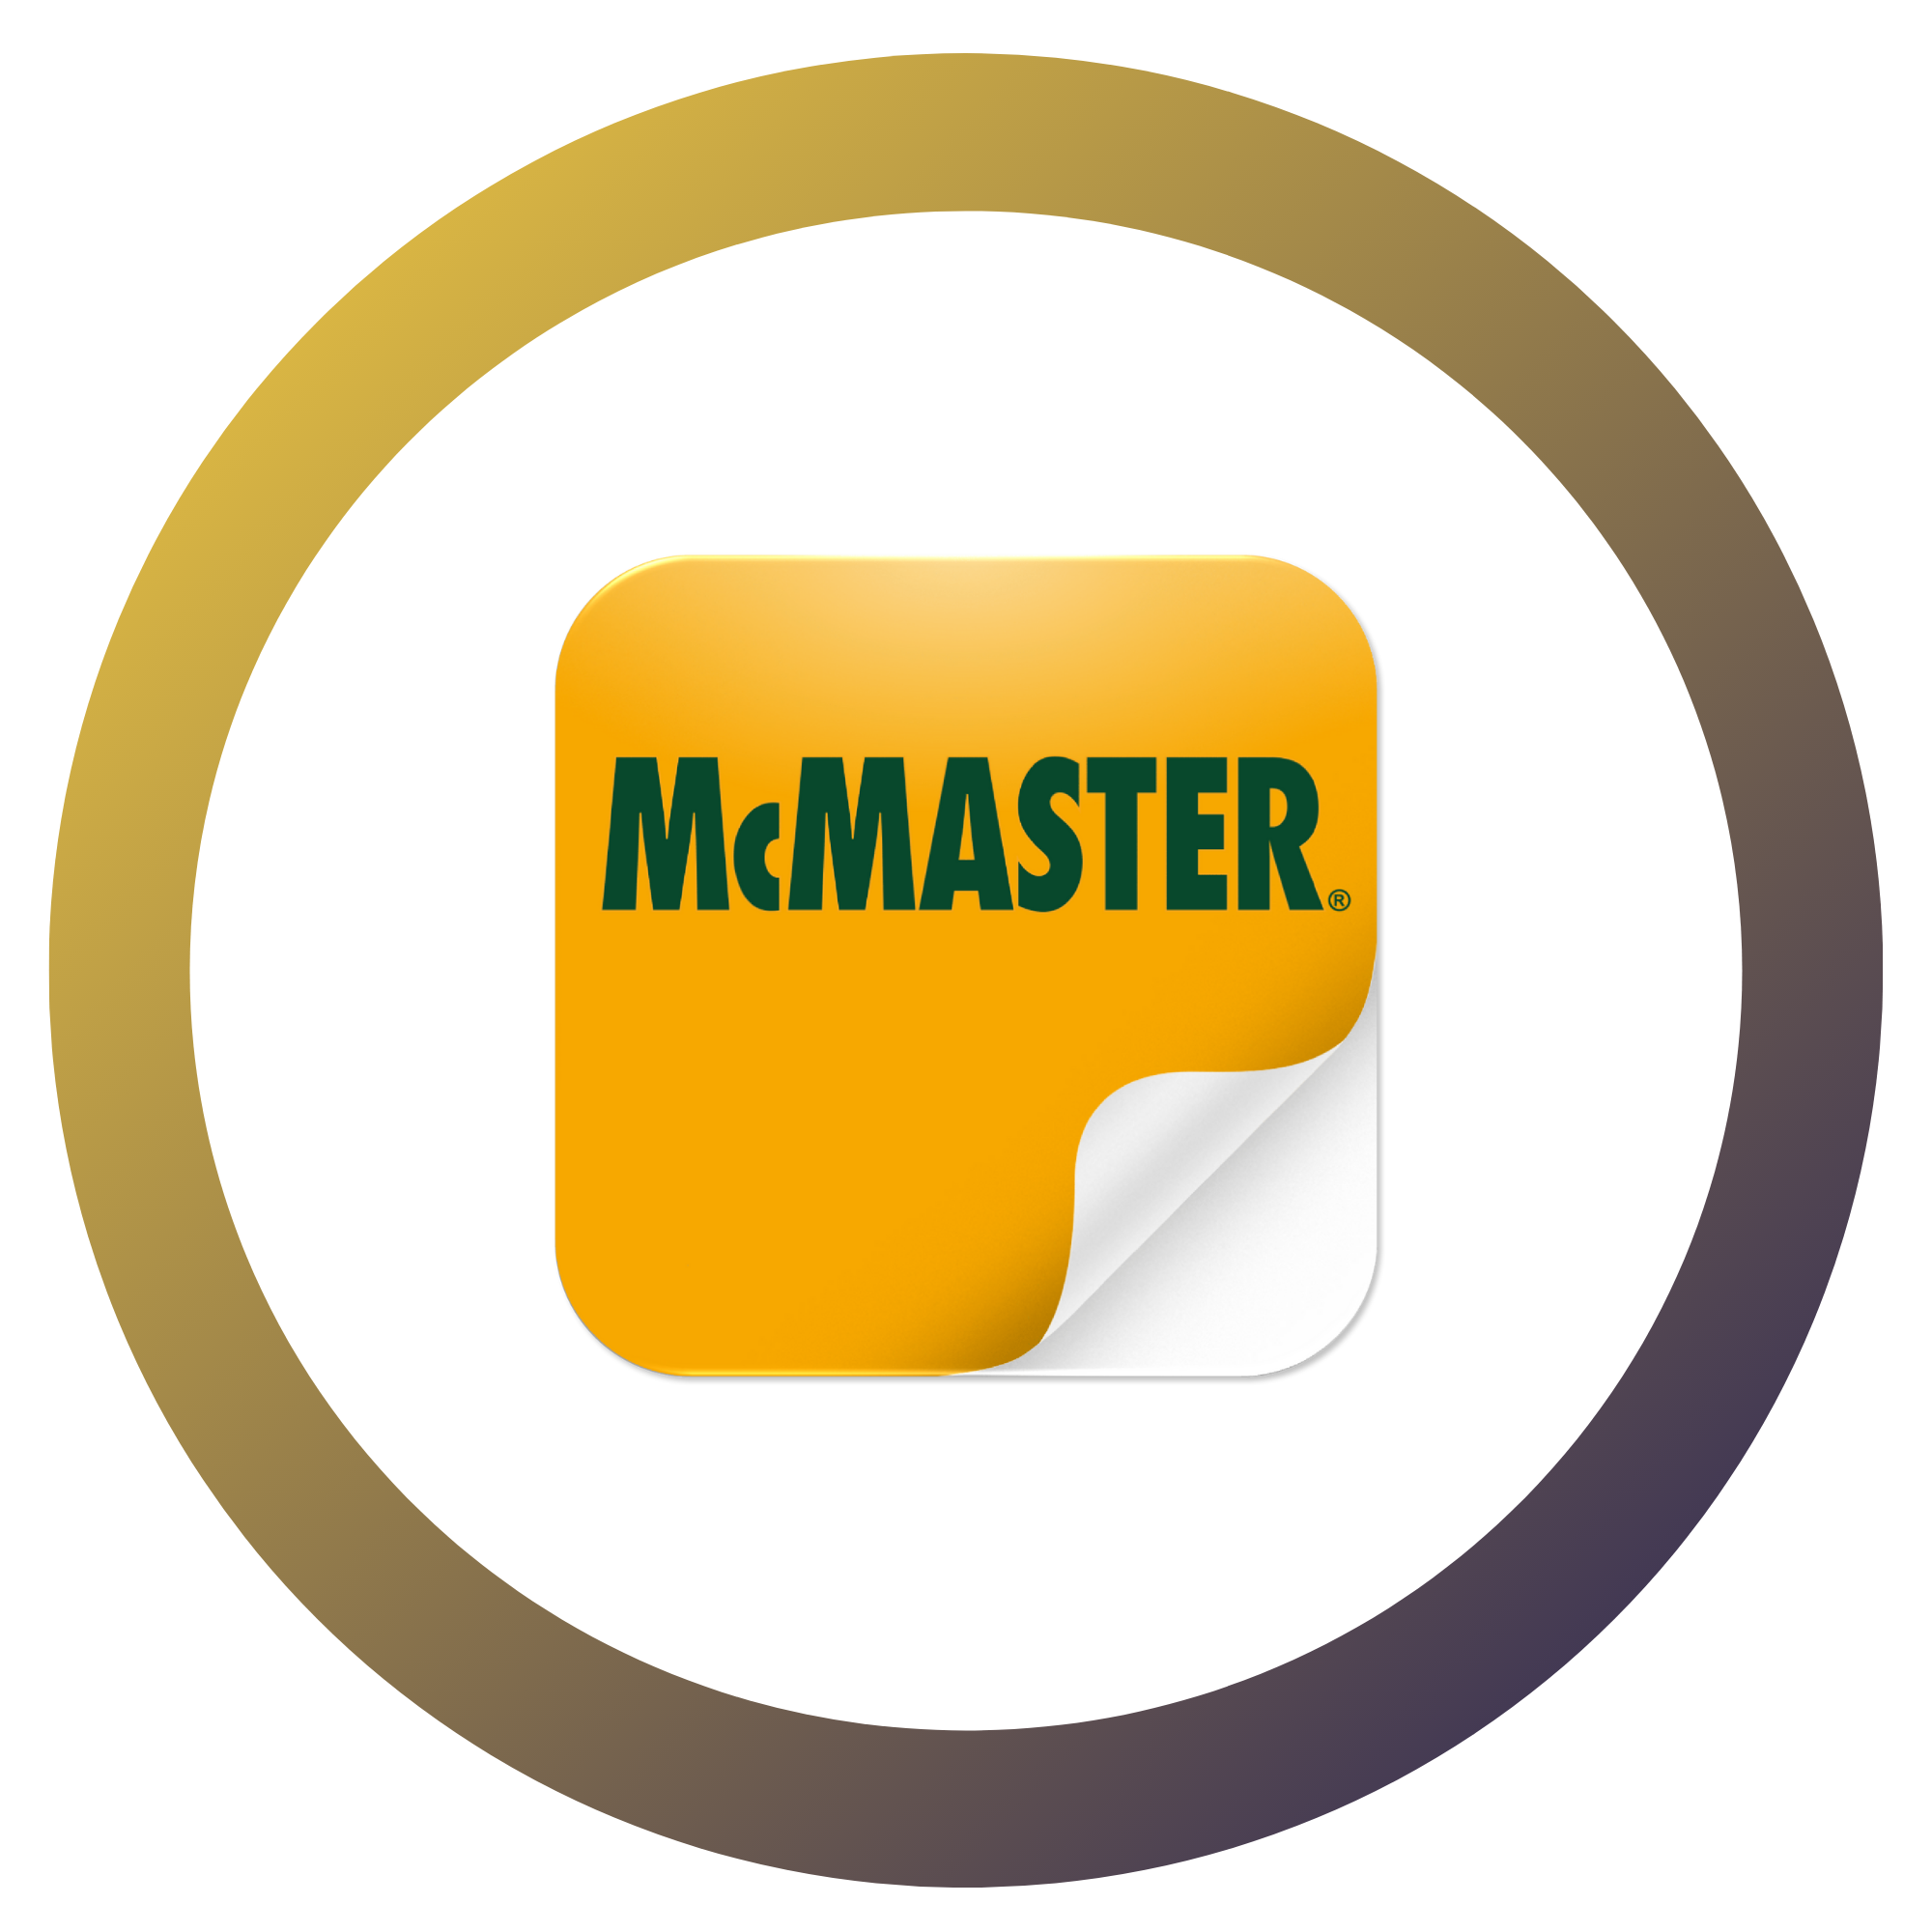 McMasterCarr is a Campus Forward Award Winner 2022